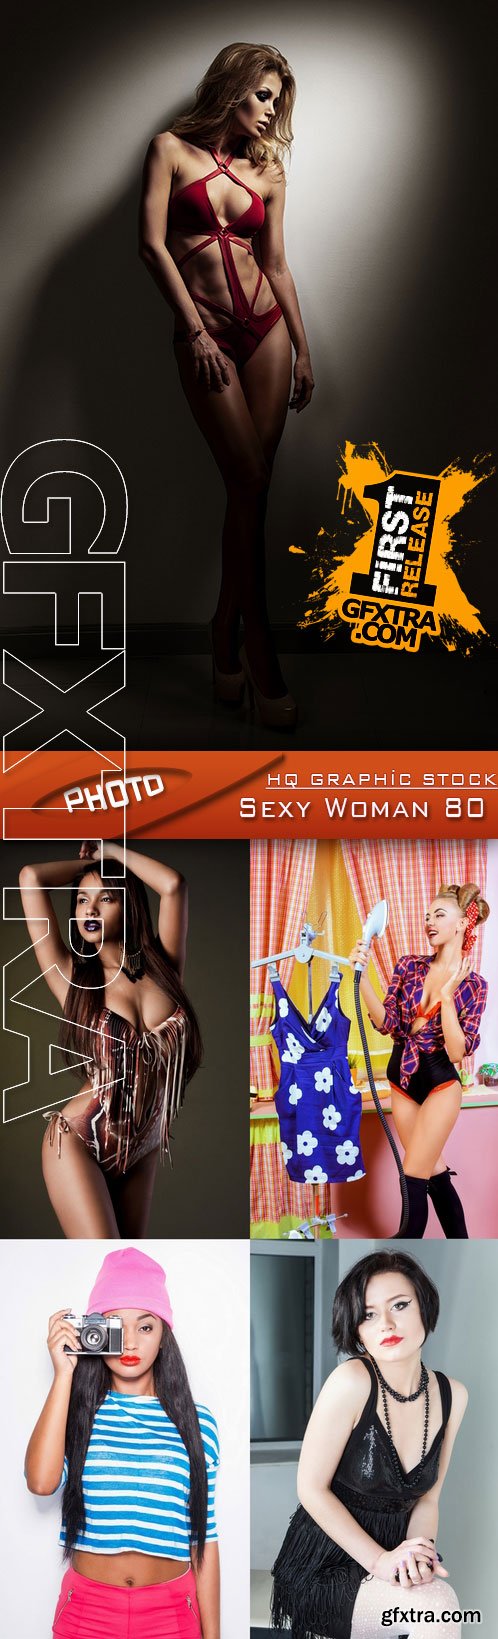 Stock Photo - Sexy Woman 80